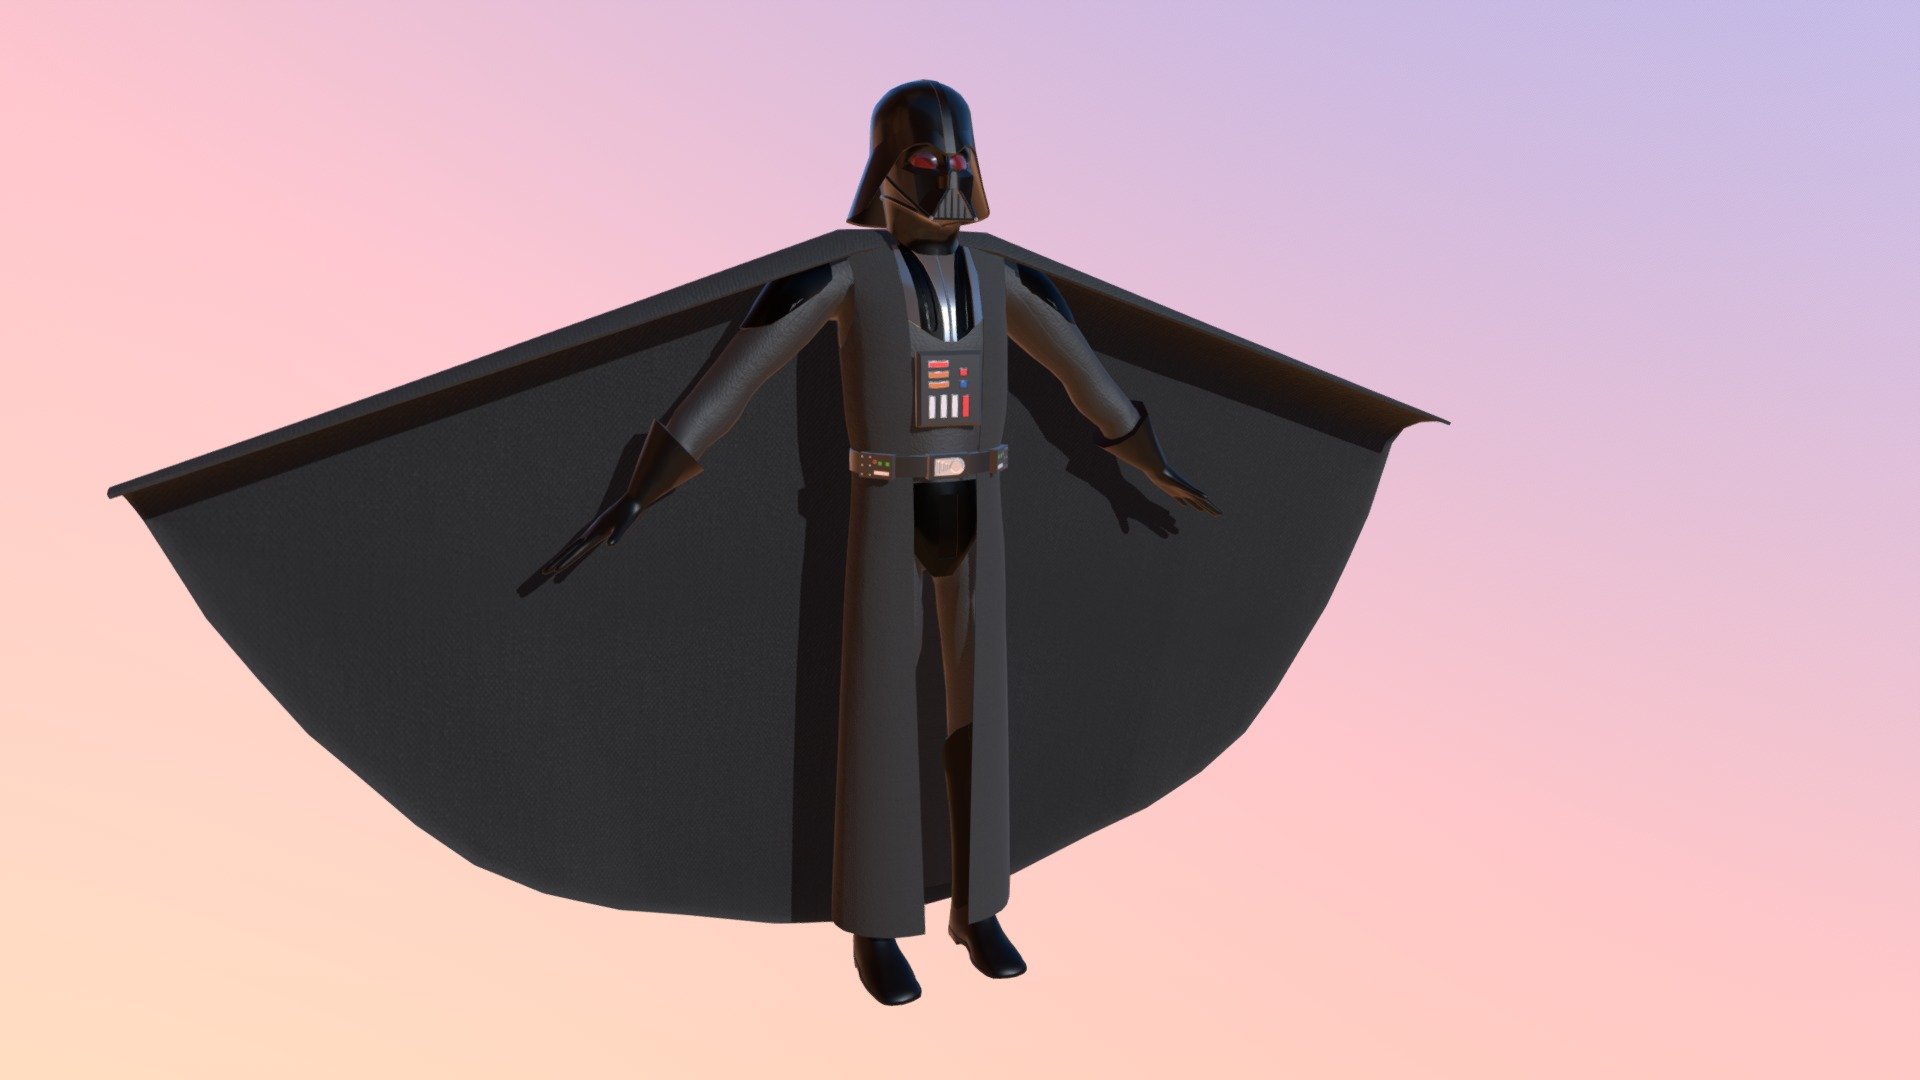 Star Wars Rebels Style Darth Vader model by Matthew Meyers [cff9a44]